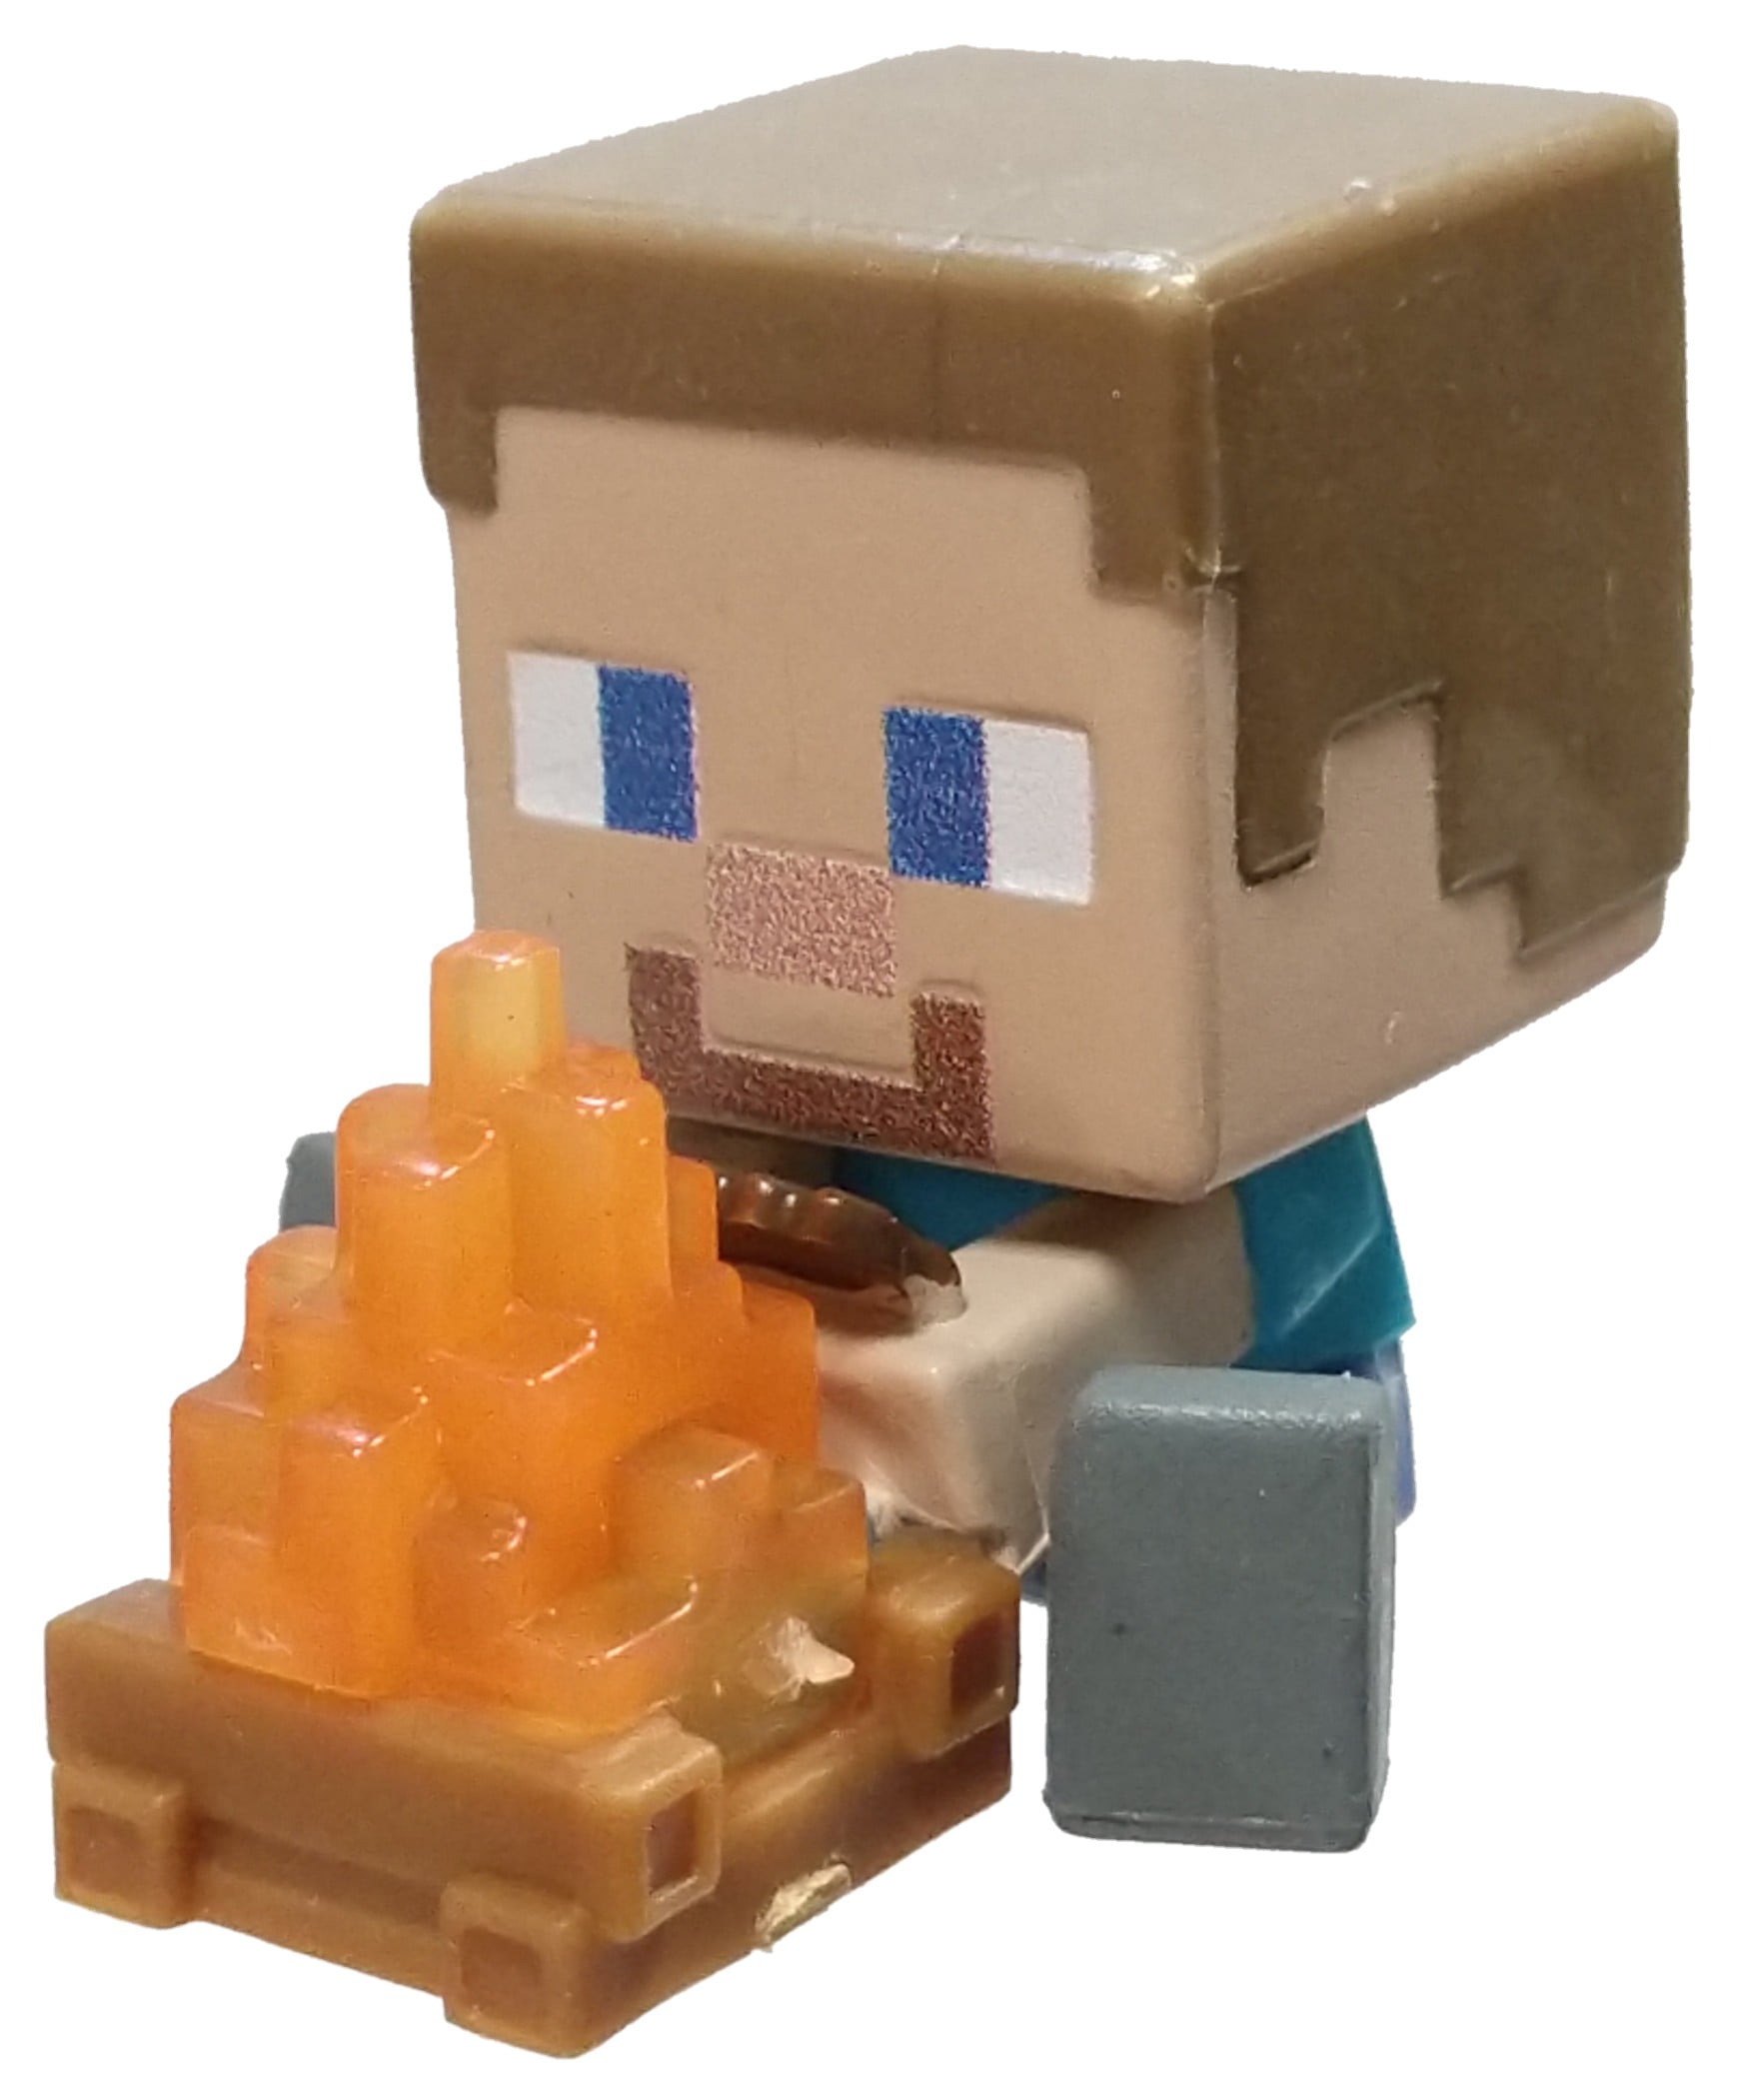 Minecraft Village Pillage Series 21 Steve Minifigure No Packaging Walmart Com Walmart Com